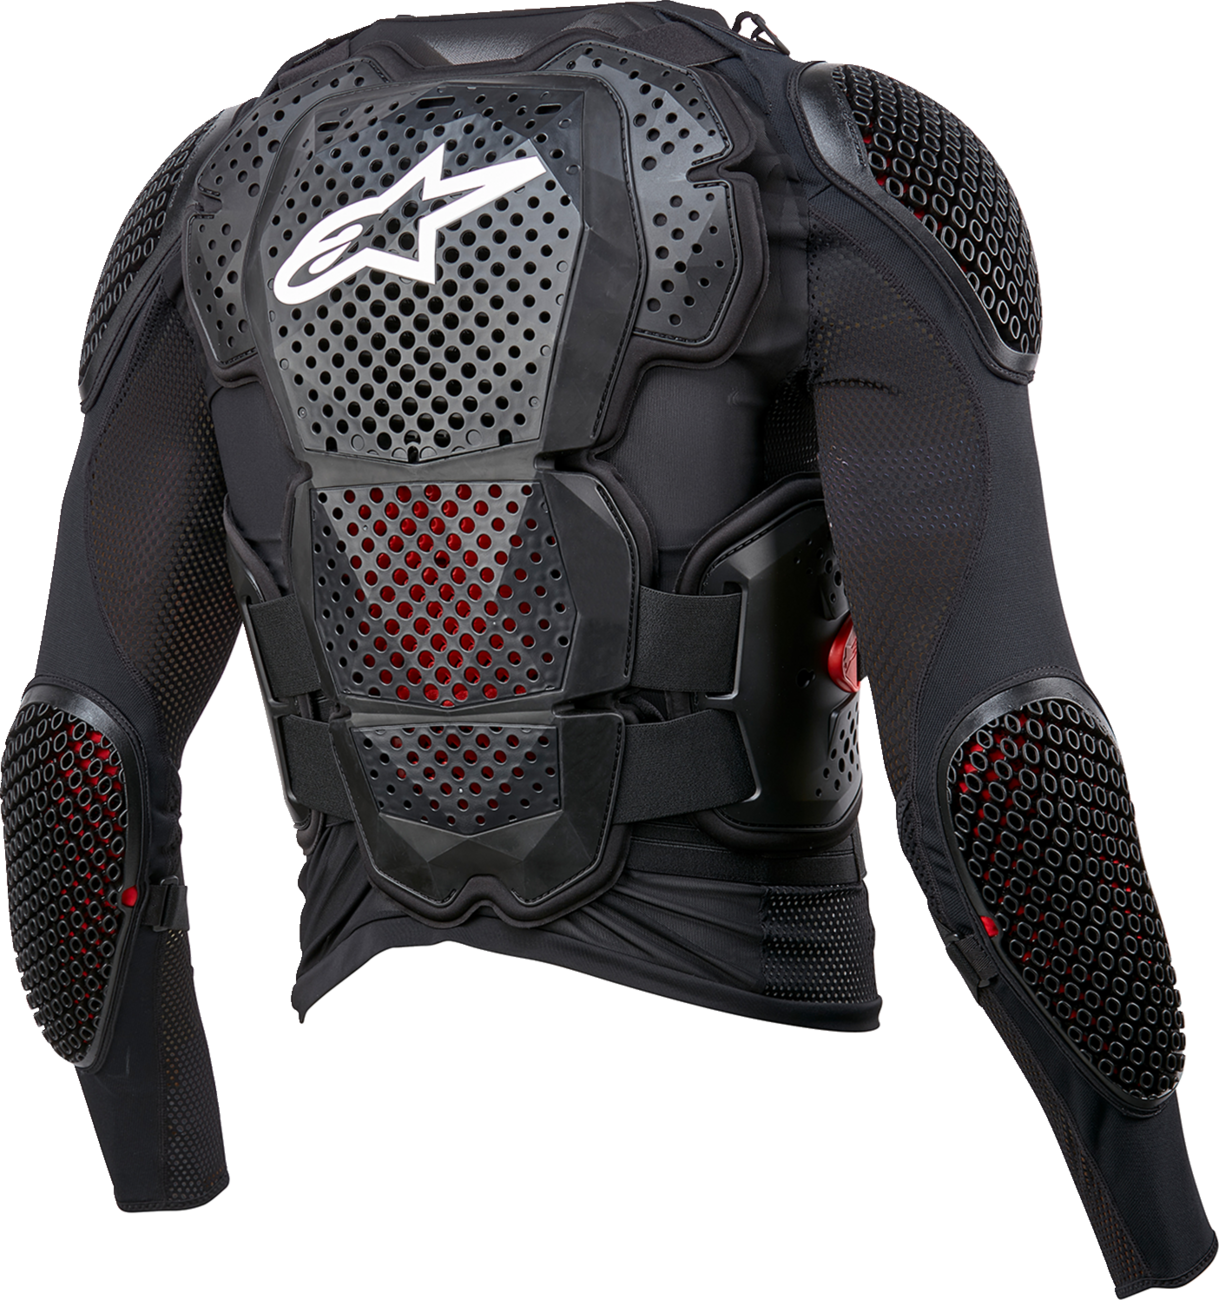 ALPINESTARS Bionic Tech v3 Jacket - Black/White/Red - Large 6506524-123-L